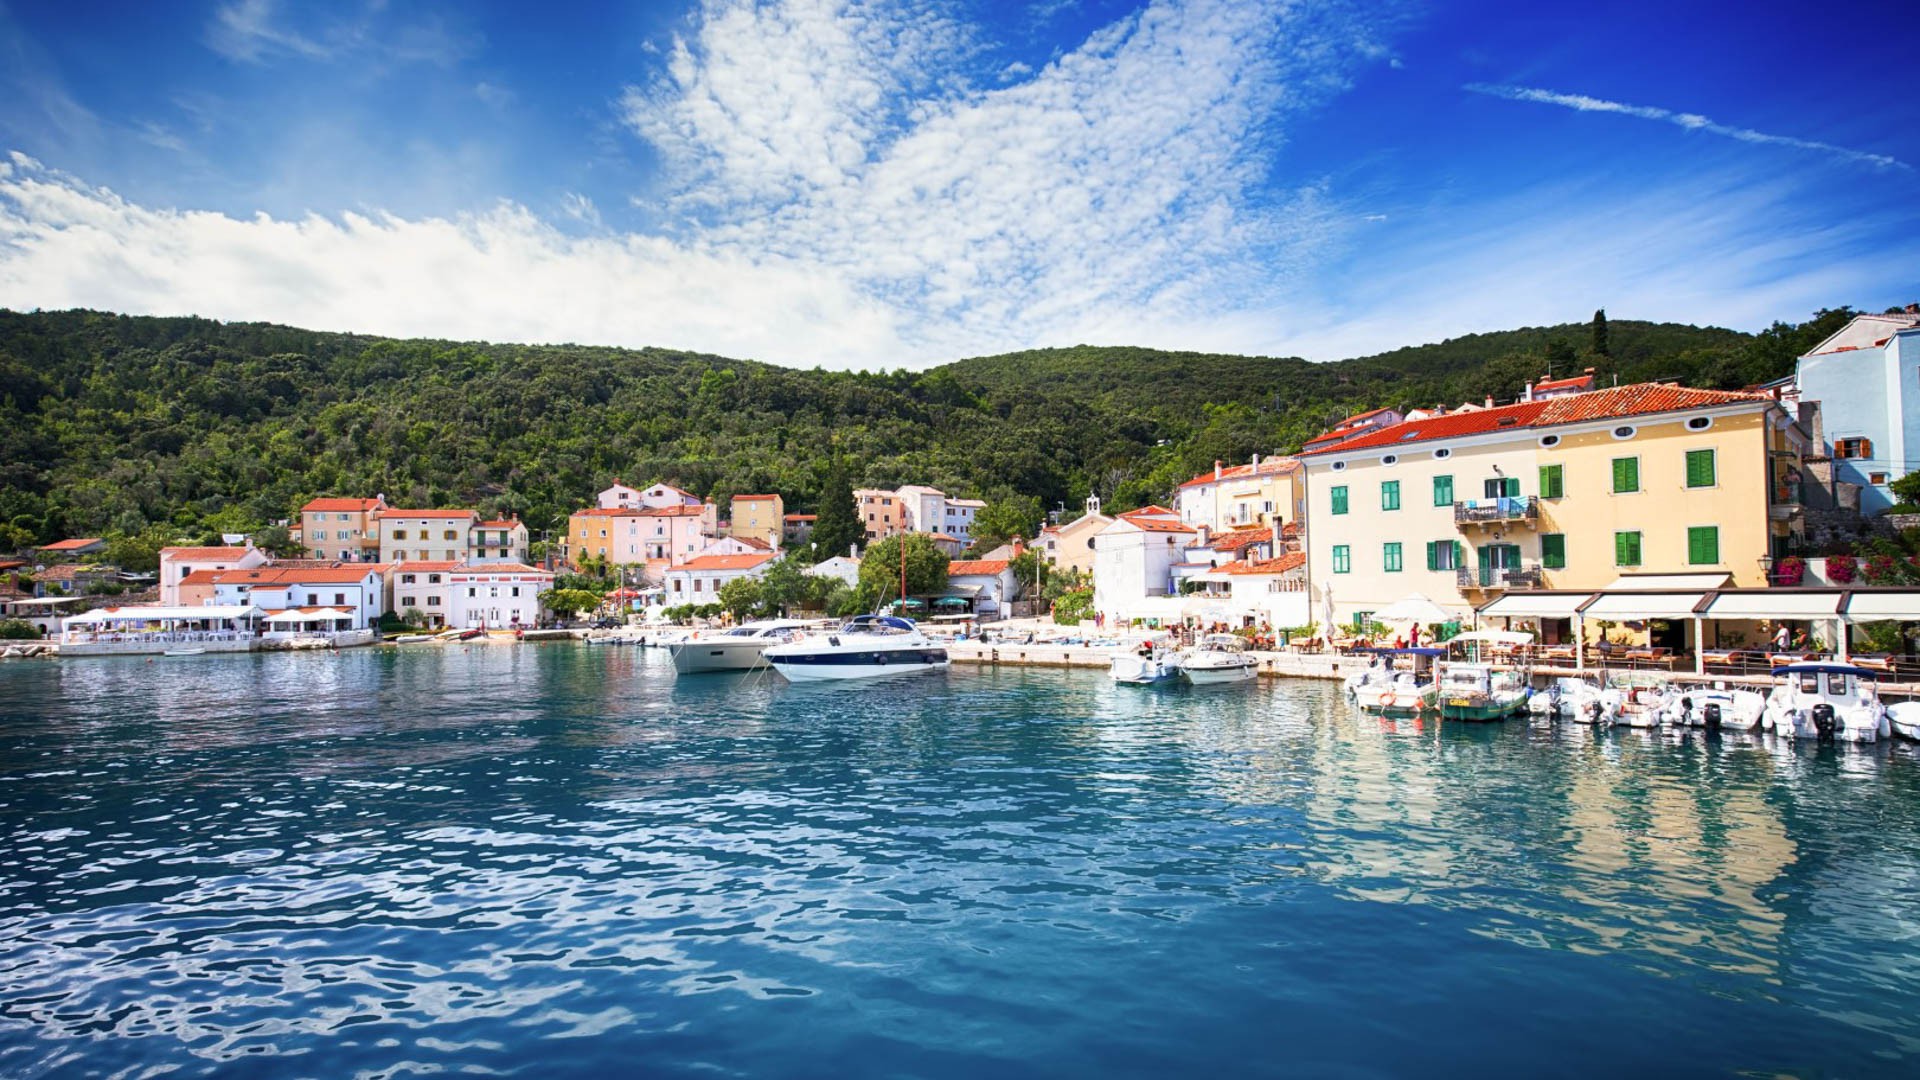 Cres - Adriatic Sea | Croatia Cruise Croatia Cruise